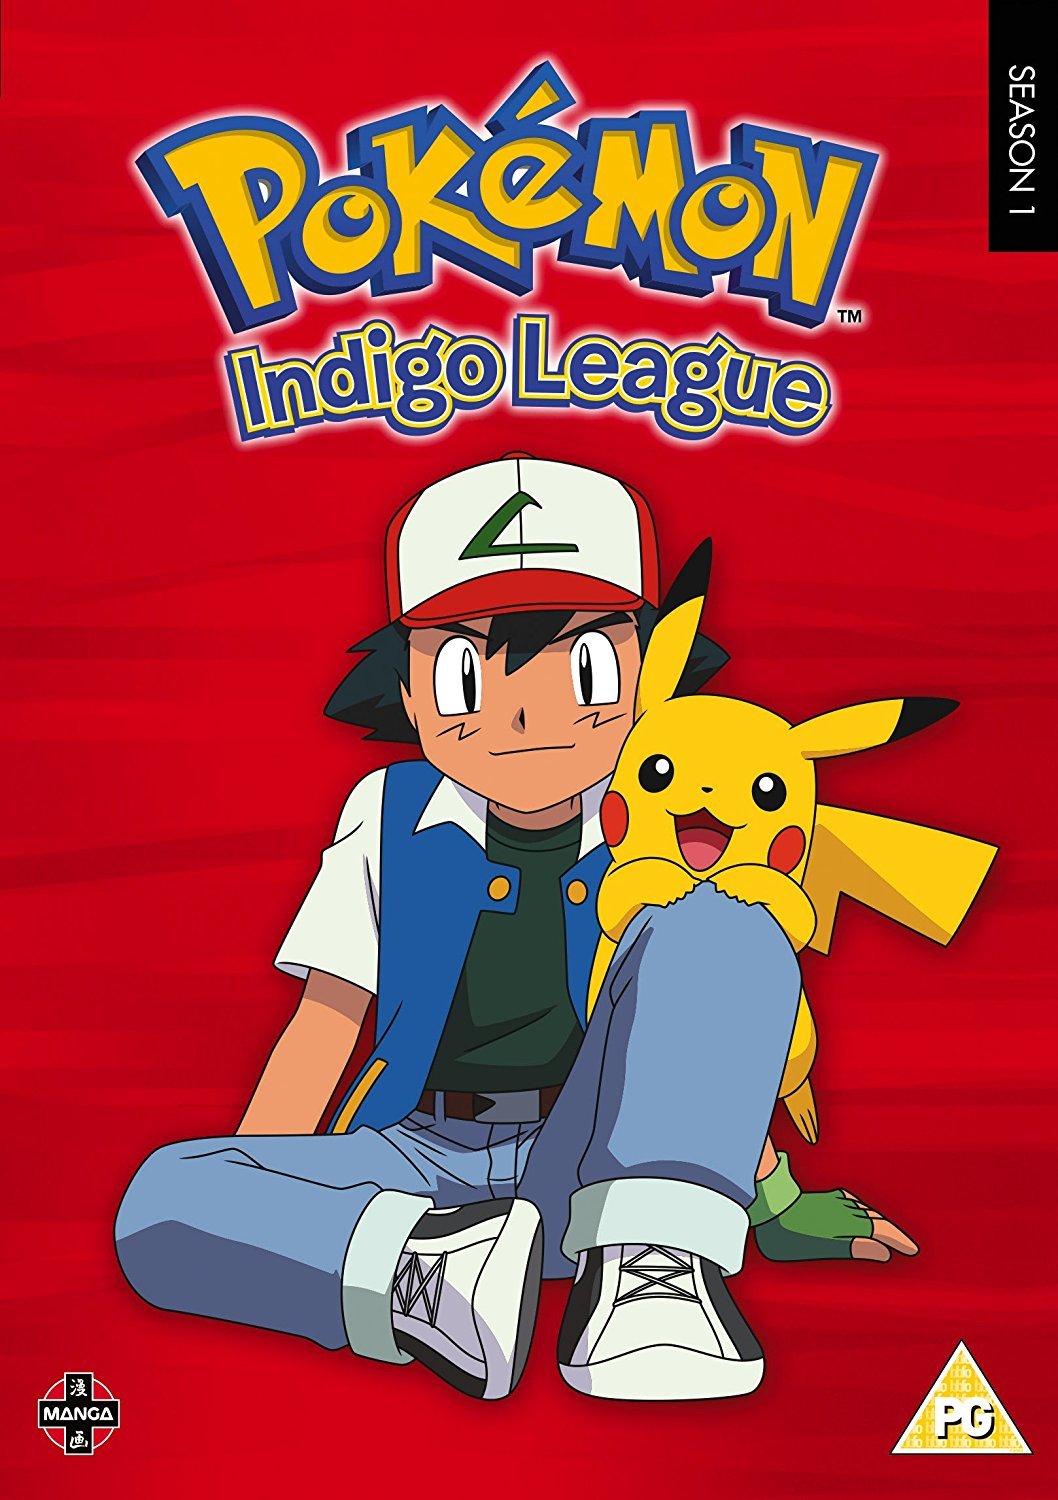 Stiahni si Seriál Pokemon 1.Serie Indigo League Part 1 (CZ/EN)[DVDRip][480p][AVC]